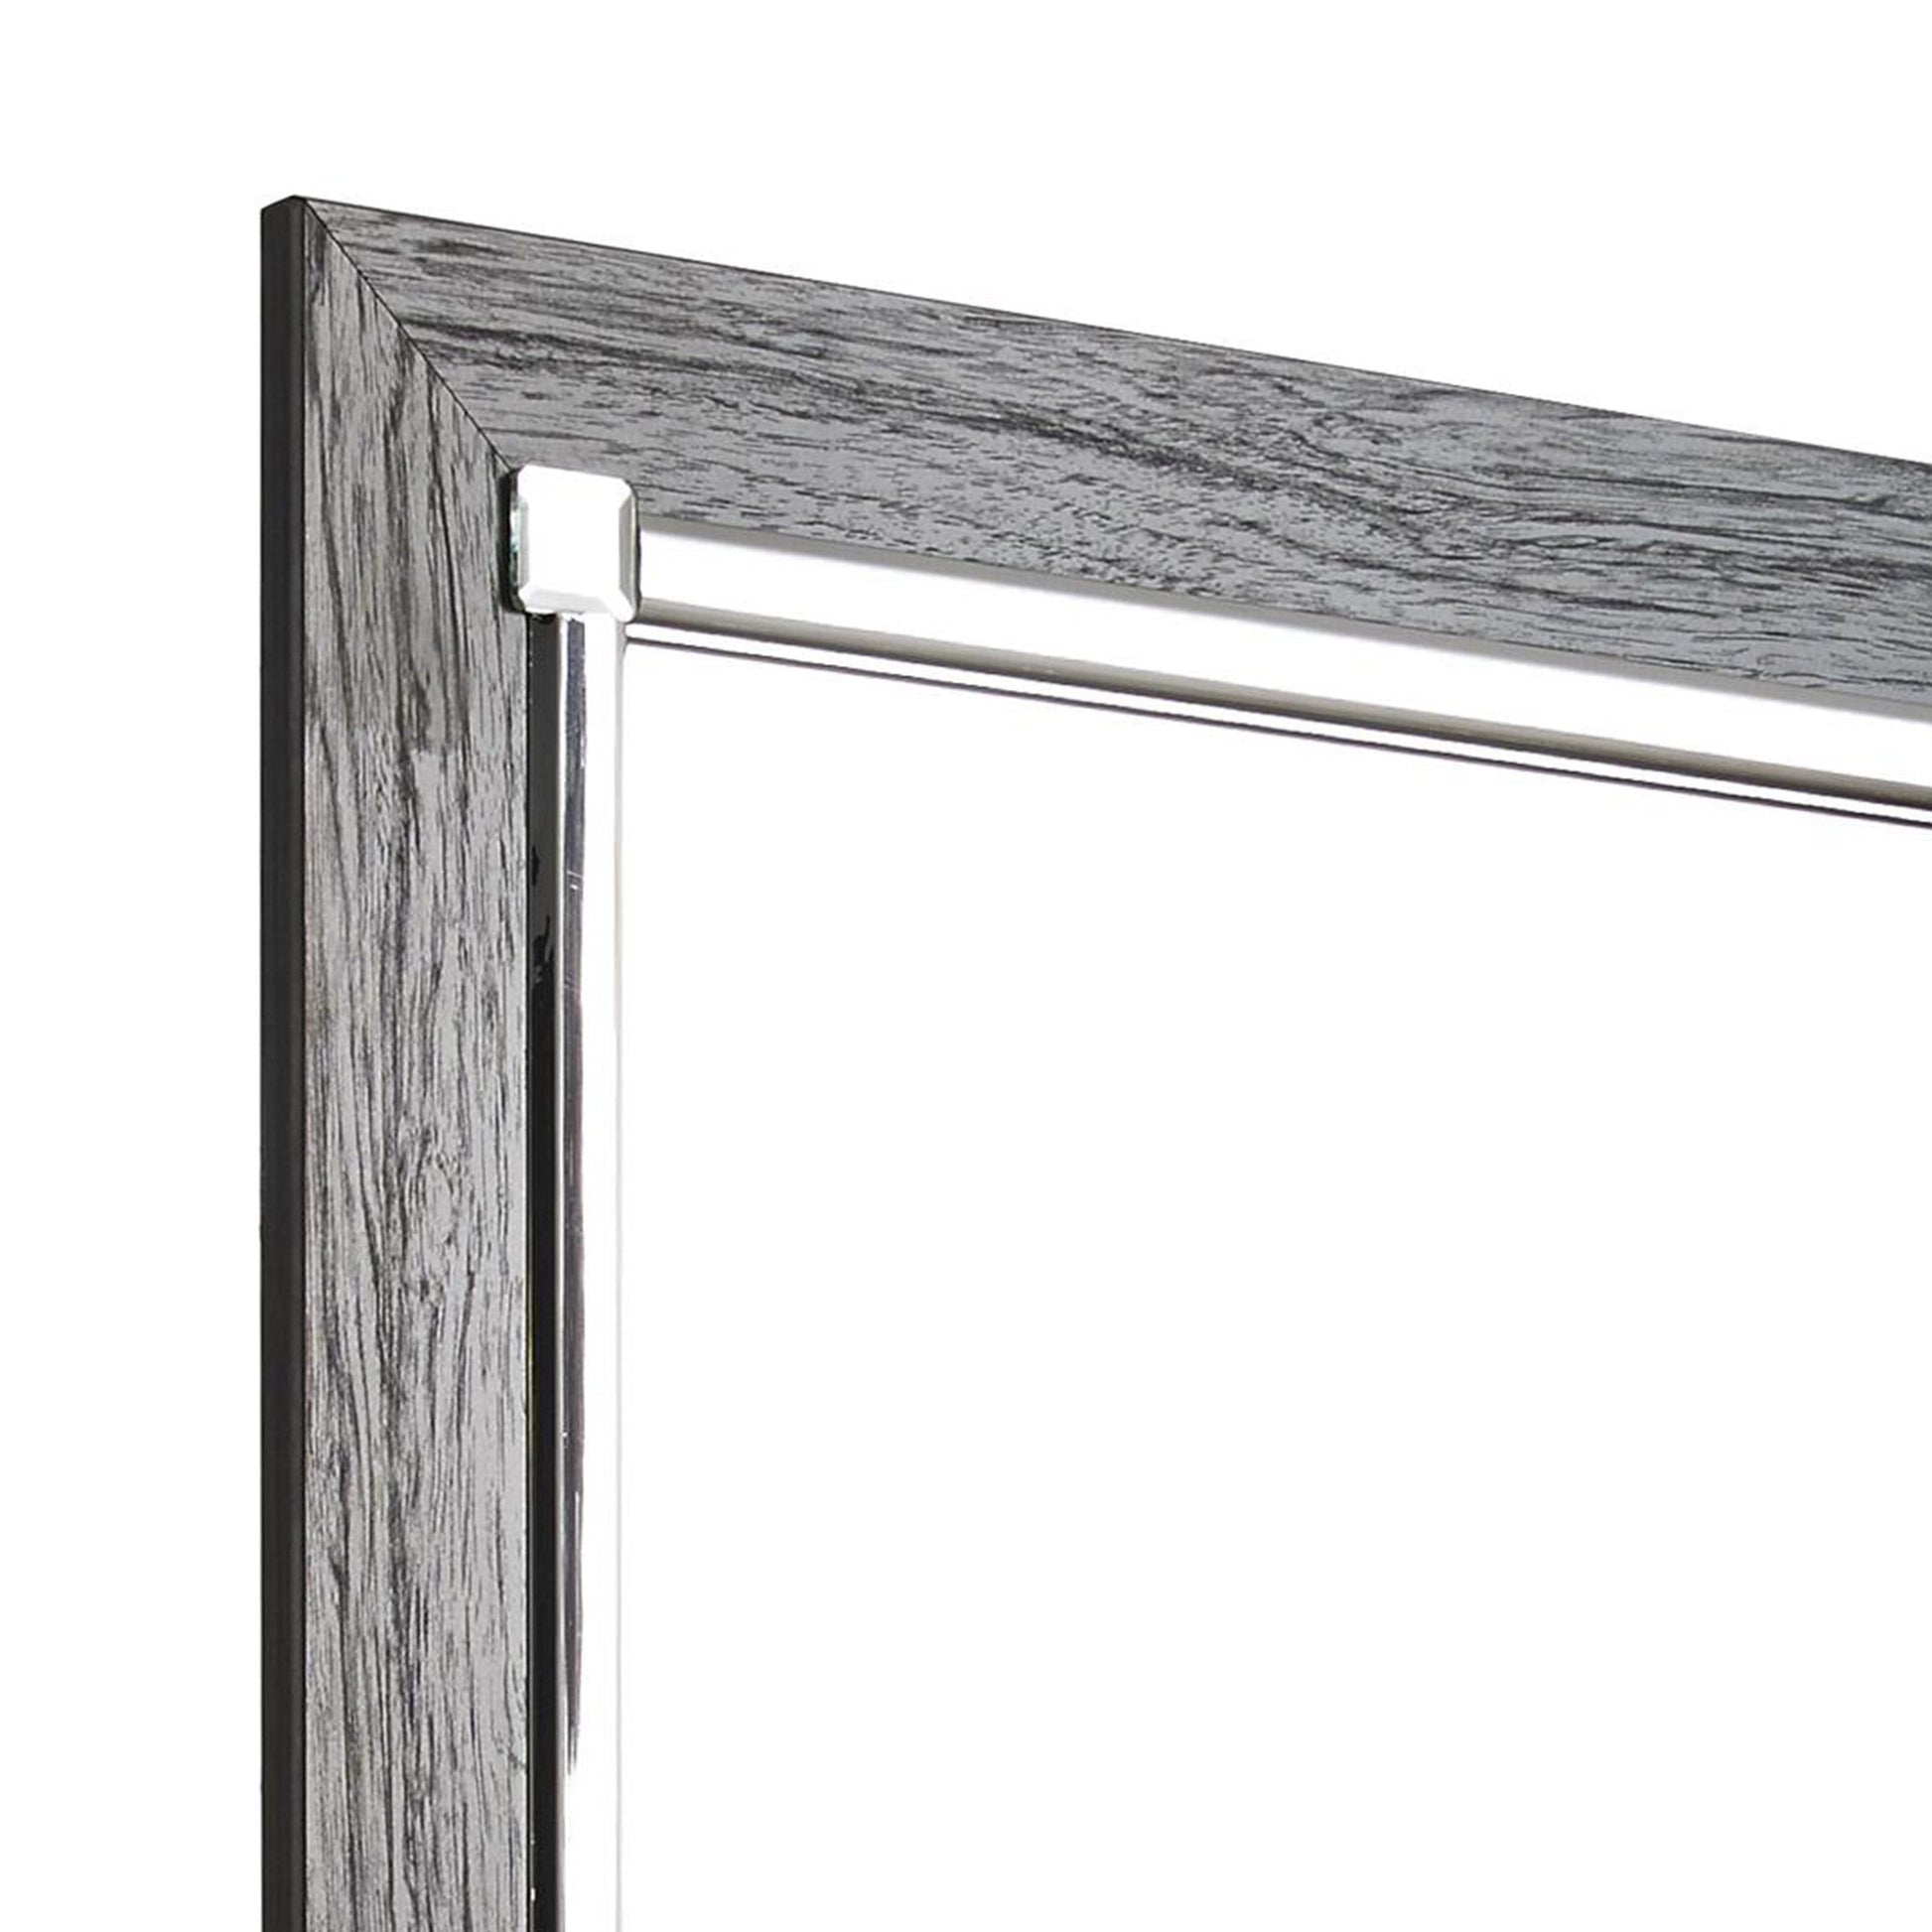 Benzara Gray Contemporary Square Shape Mirror With Wood Grain Texture